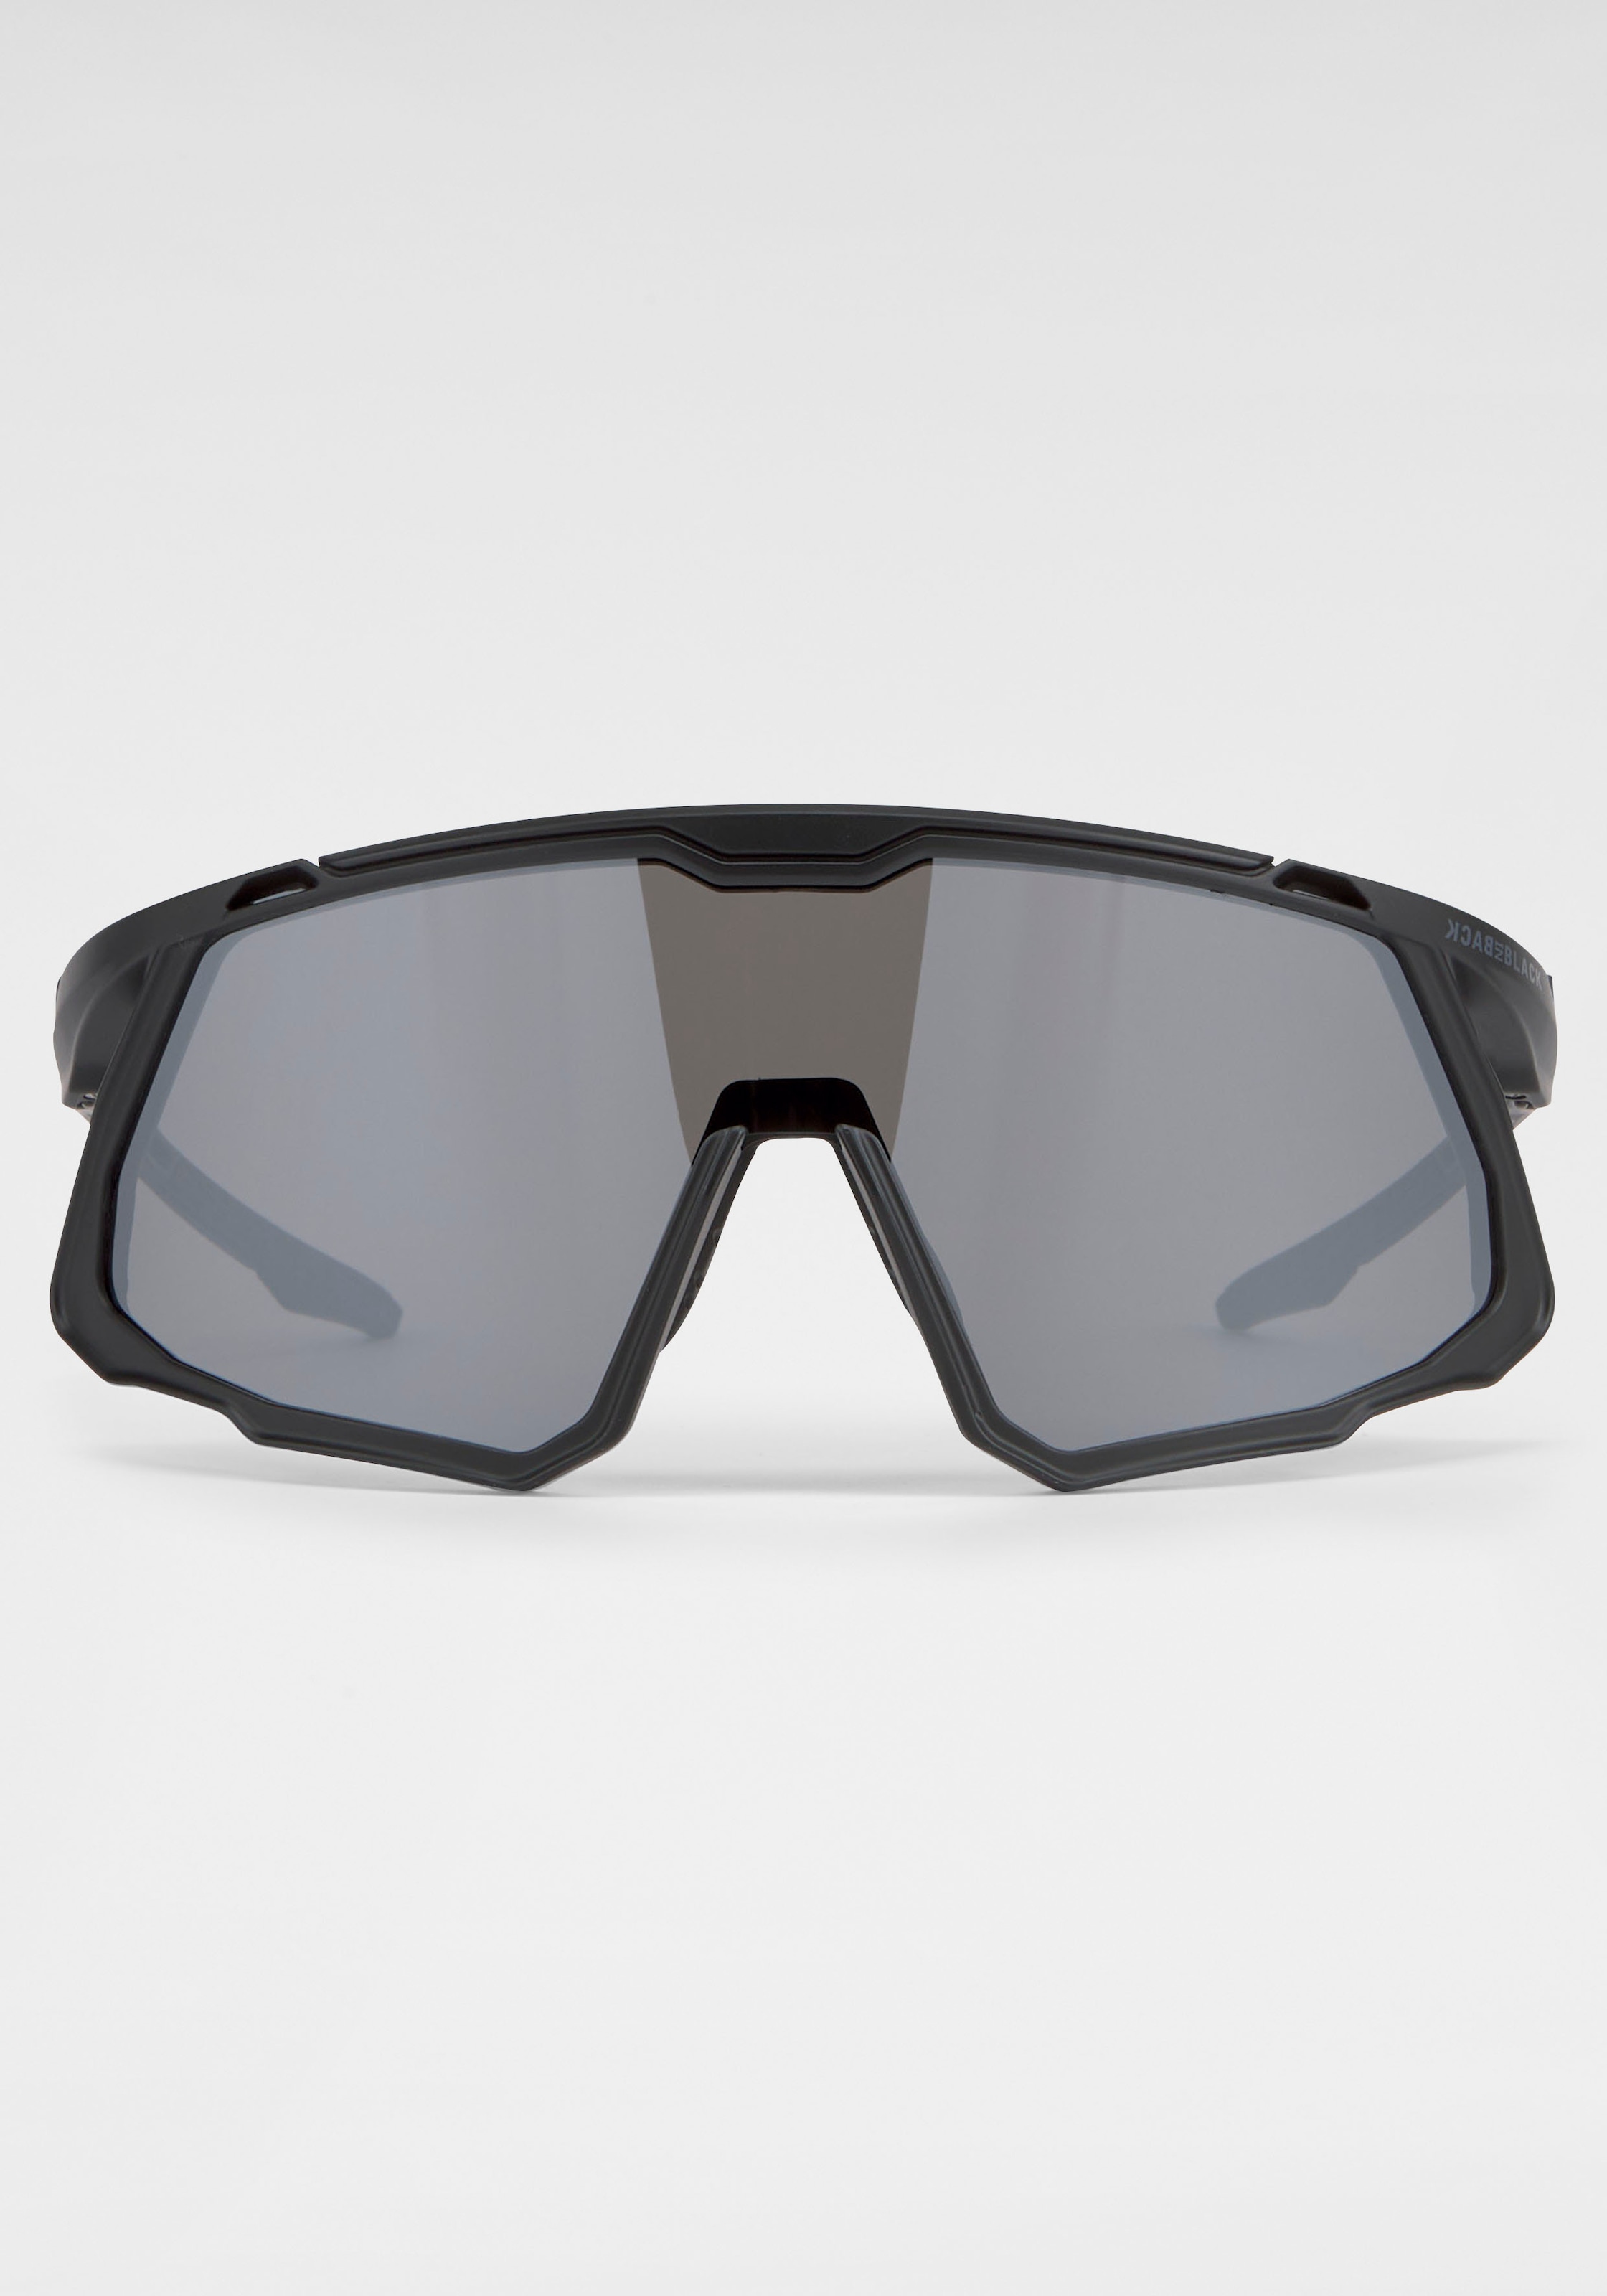 BACK IN BLACK Eyewear gebogene Form Sonnenbrille, online